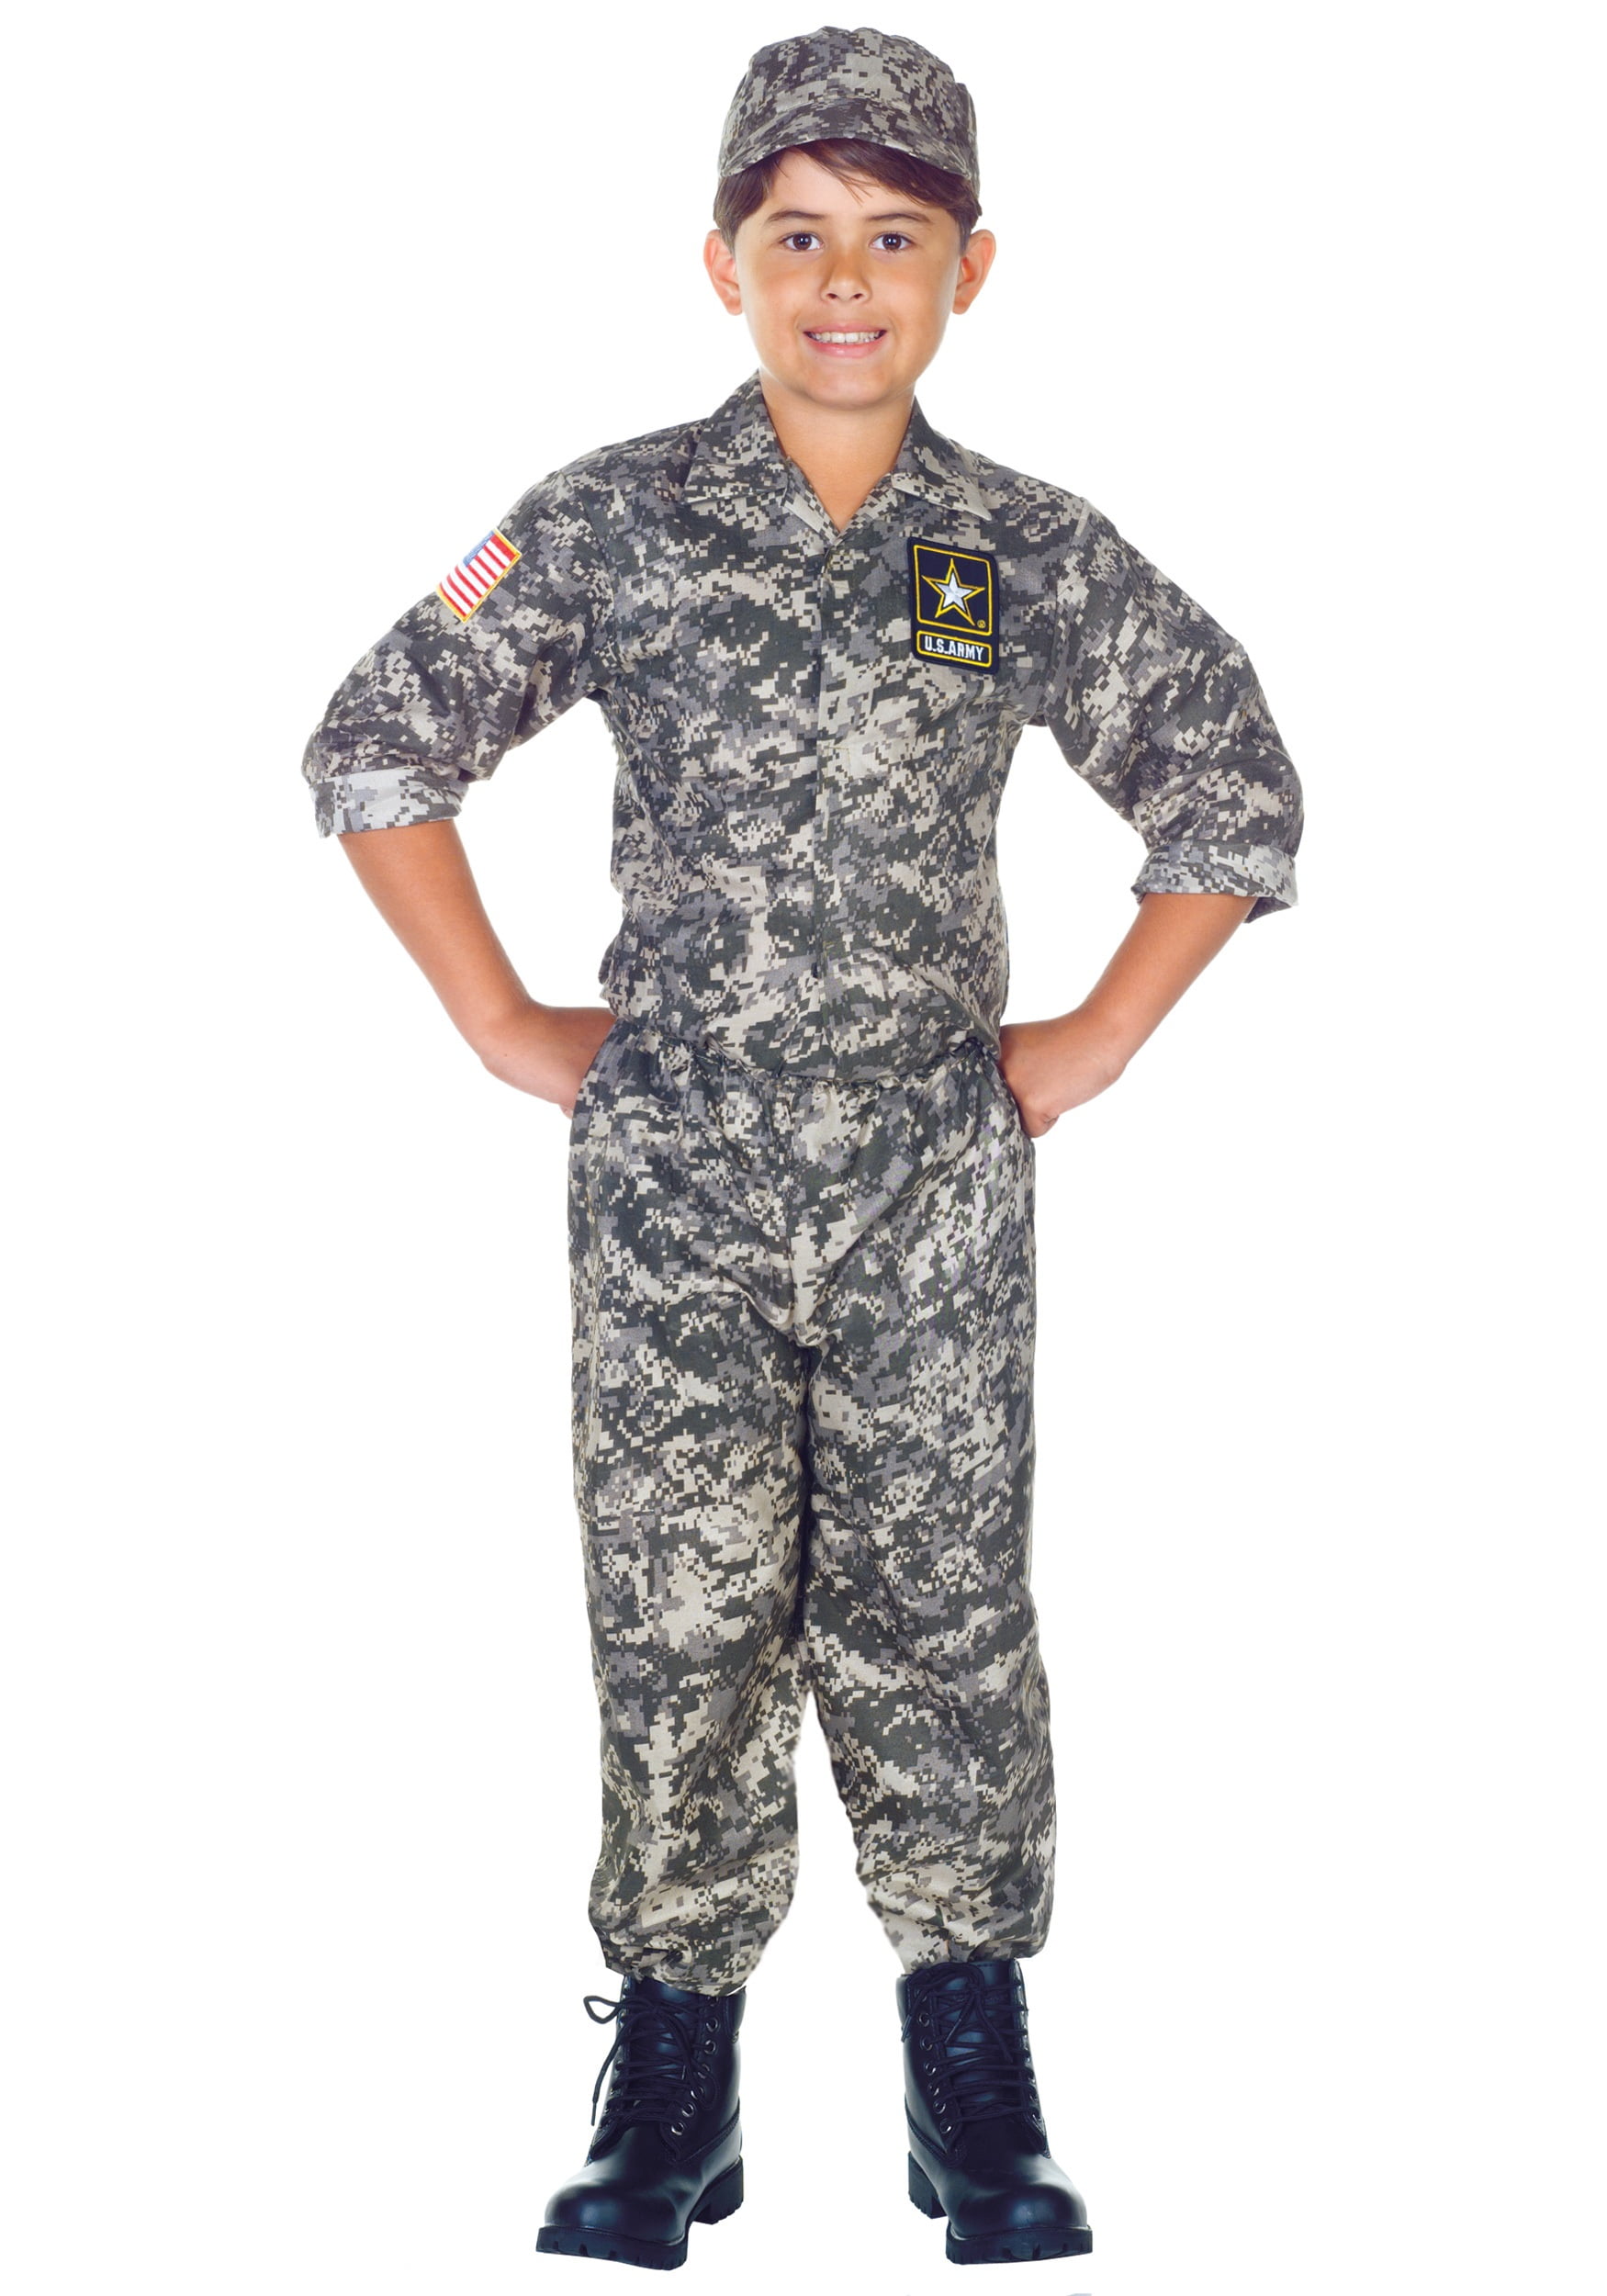 Shirt Pants Cap Kids Pack 2 Army Camo Fancy Dress Children's Soldier Outfit 